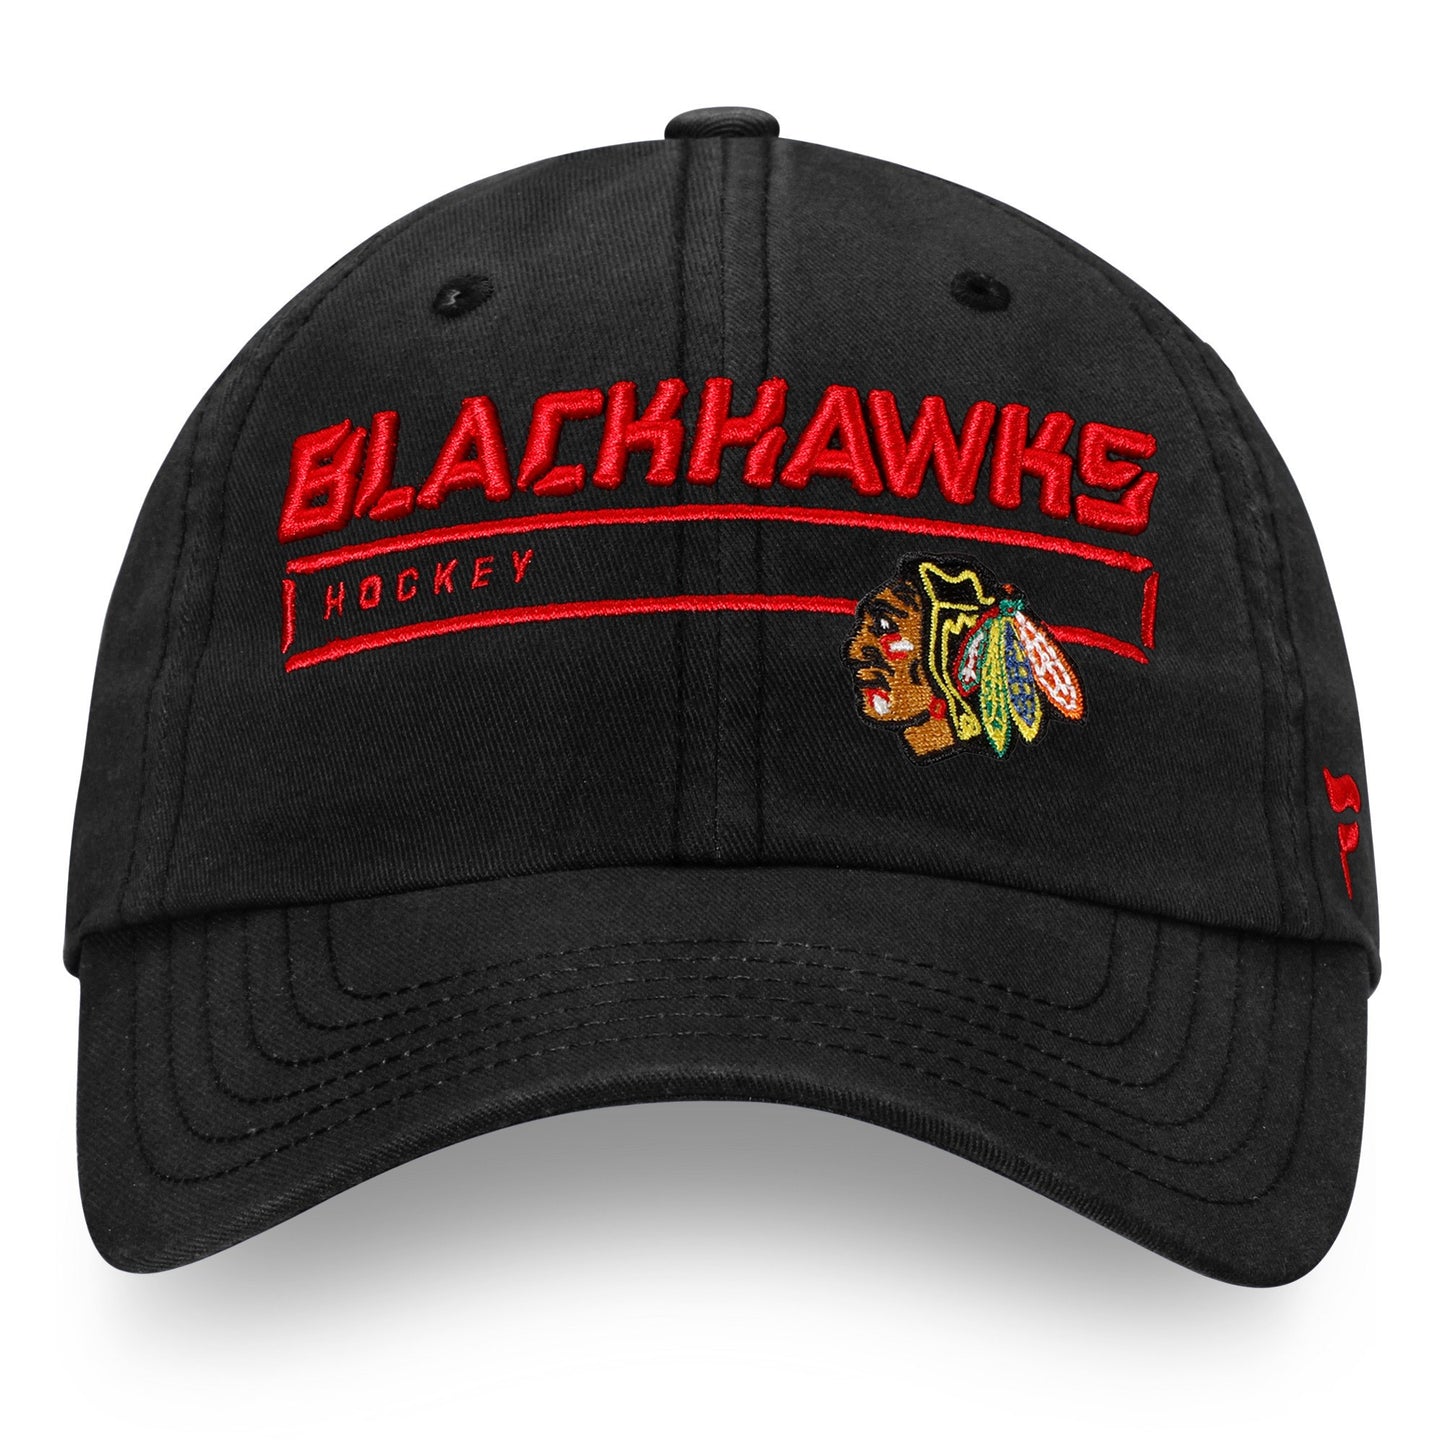 Men's Chicago Blackhawks Fanatics Branded Black Authentic Pro Rinkside Fundamental Adjustable Hat